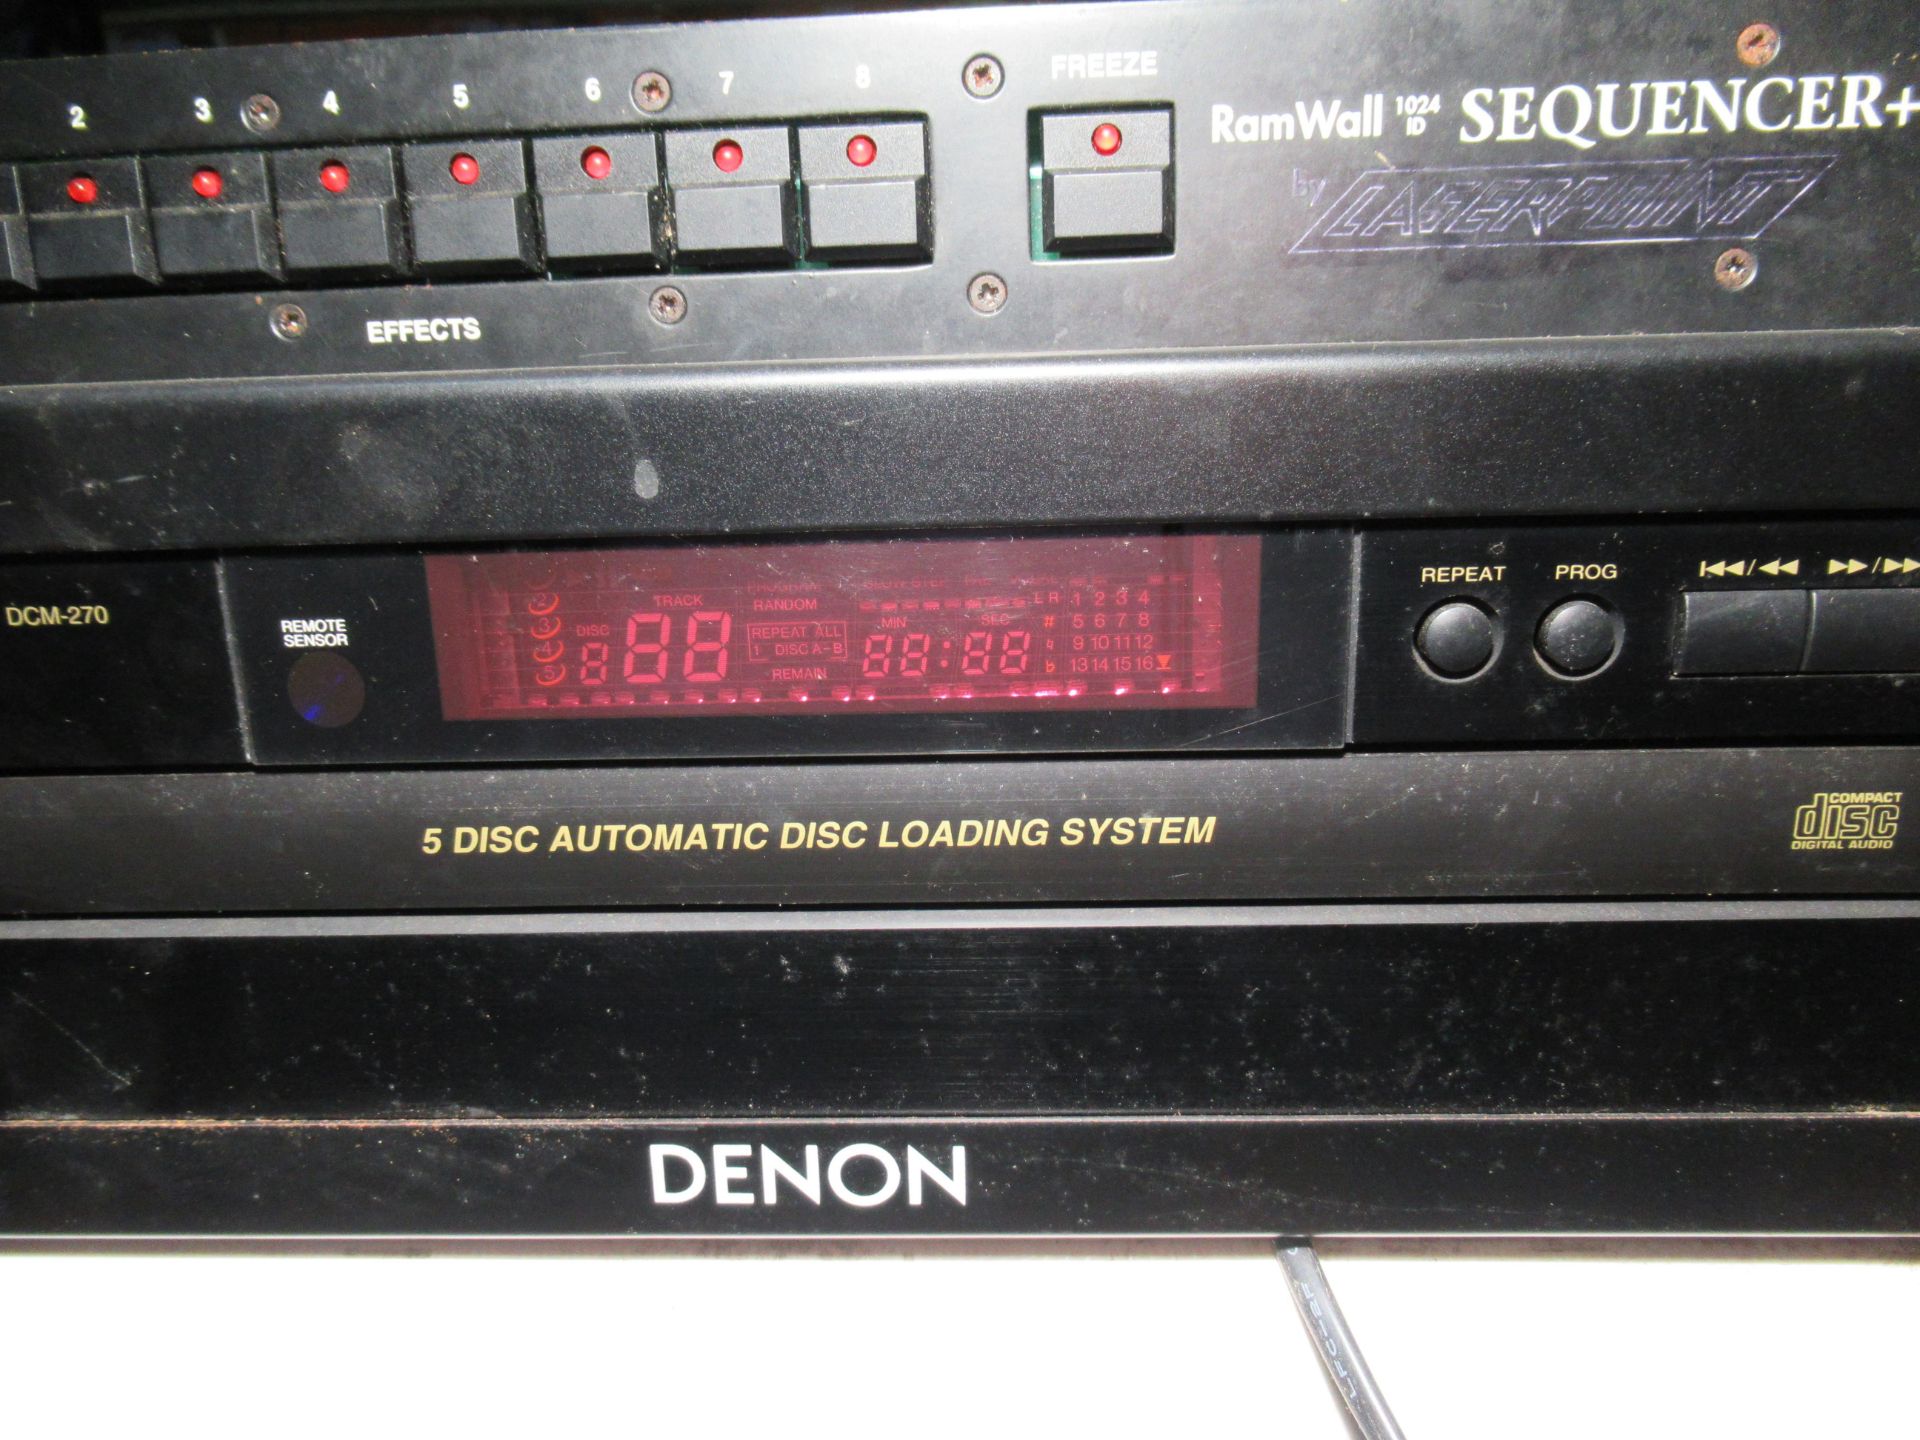 Denon DCM-270 5 Disc CD Player, Ram Wall 1042 Sequencer and a ELCA SR16 Super Regia Video Matrix Swi - Bild 4 aus 6